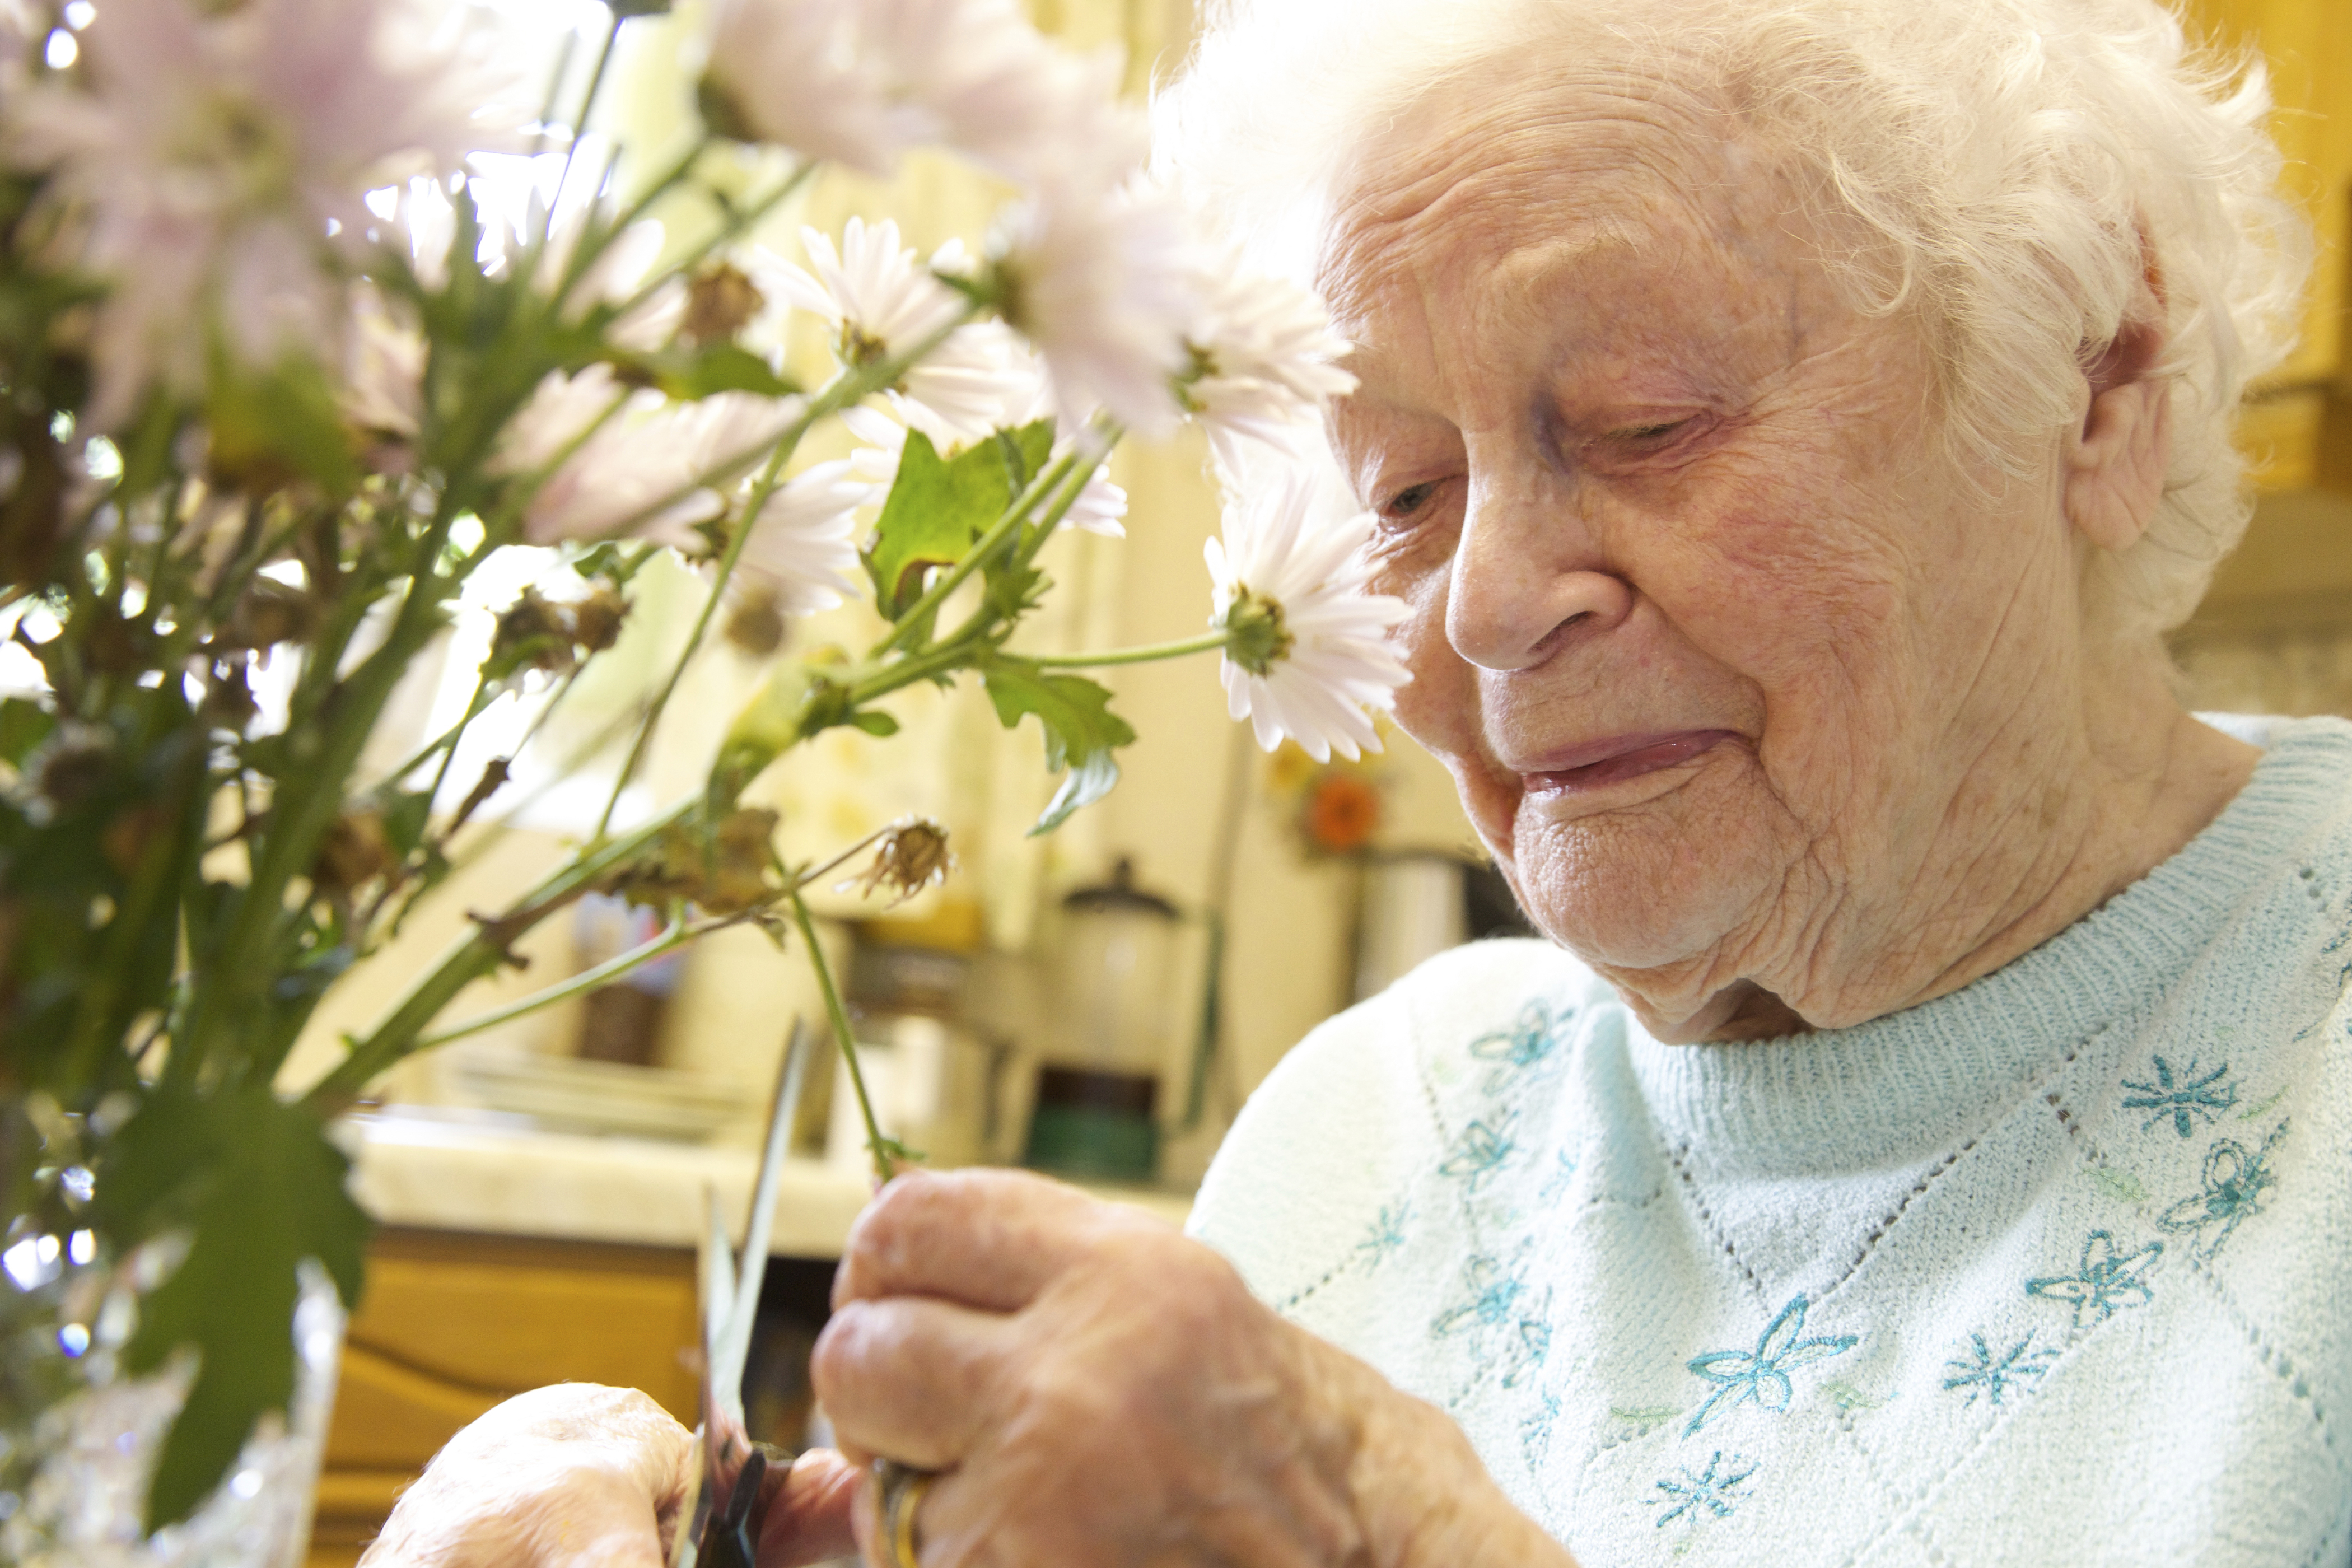 PIC - Elderly lady flower arranging